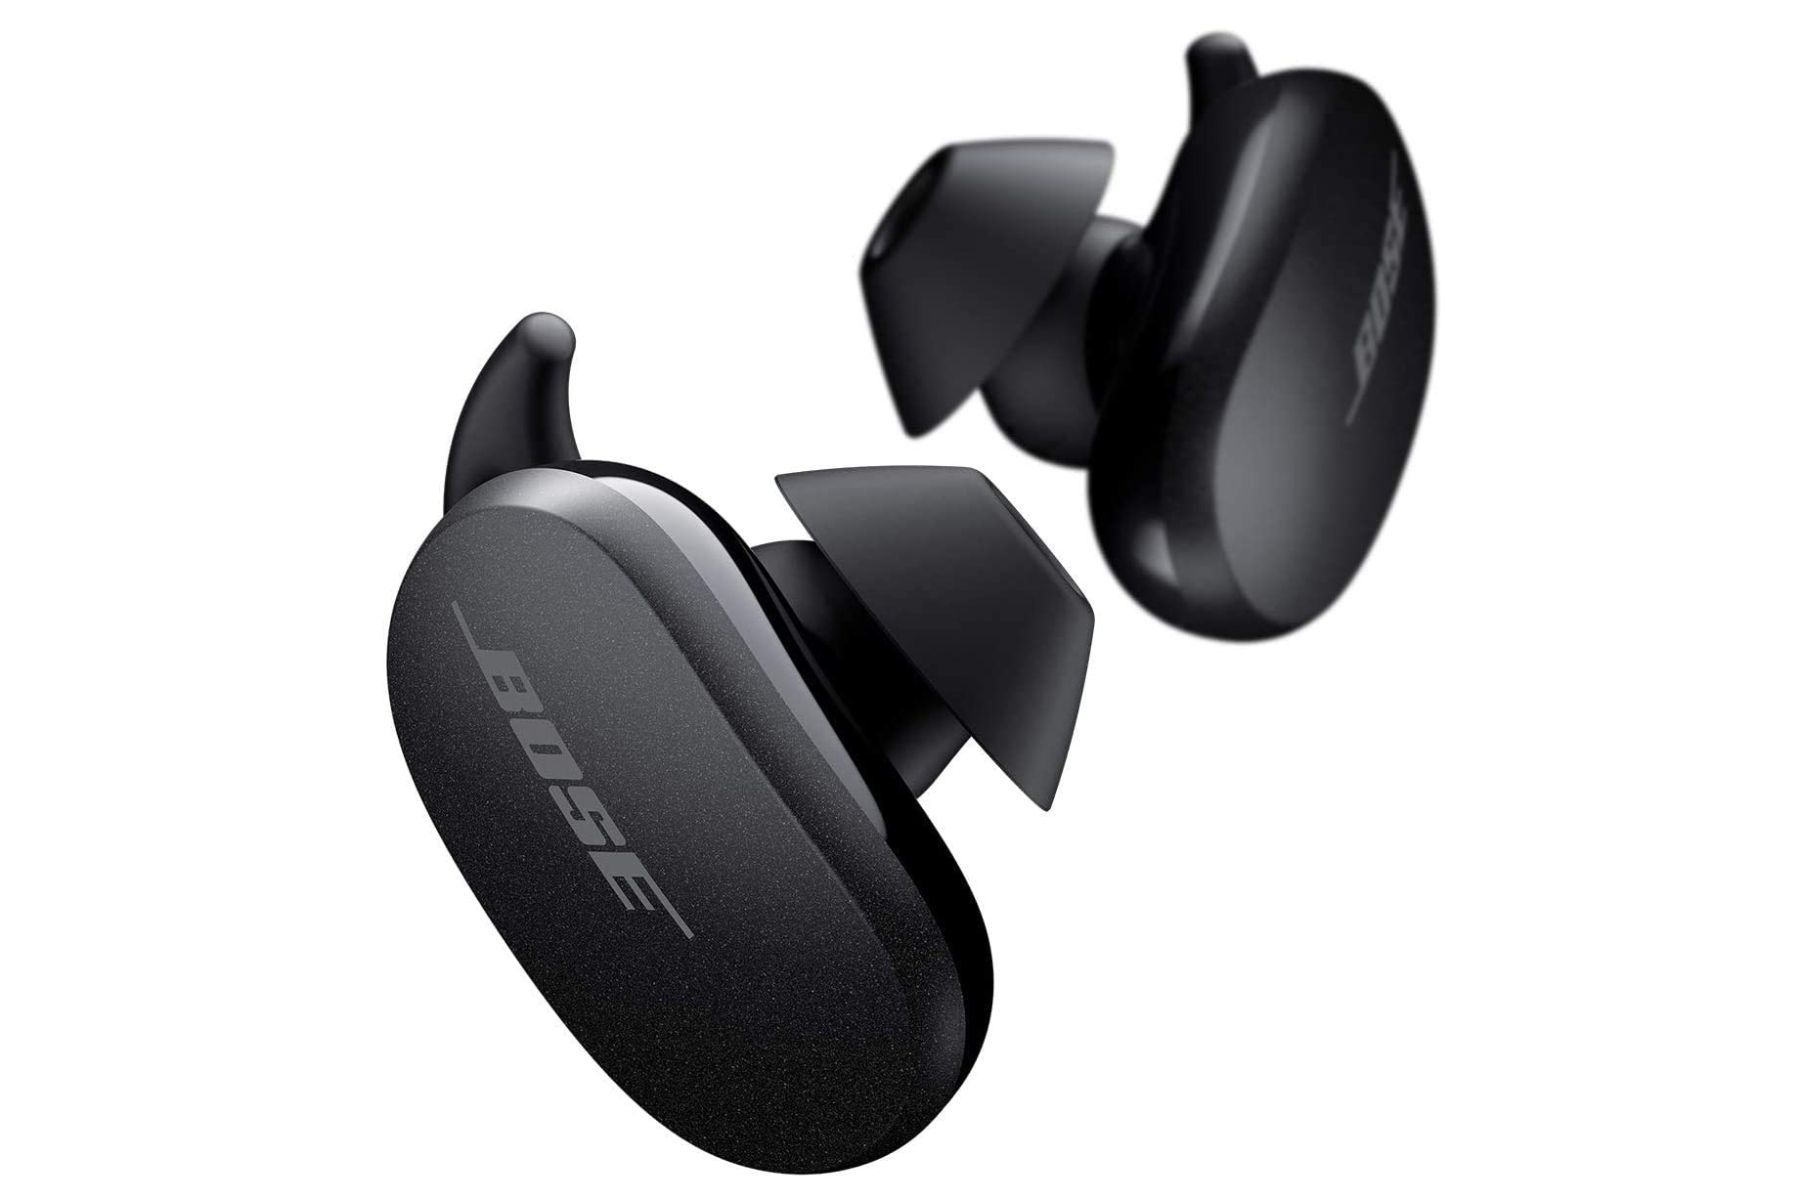 Bose QuietComfort Wireless Earbuds